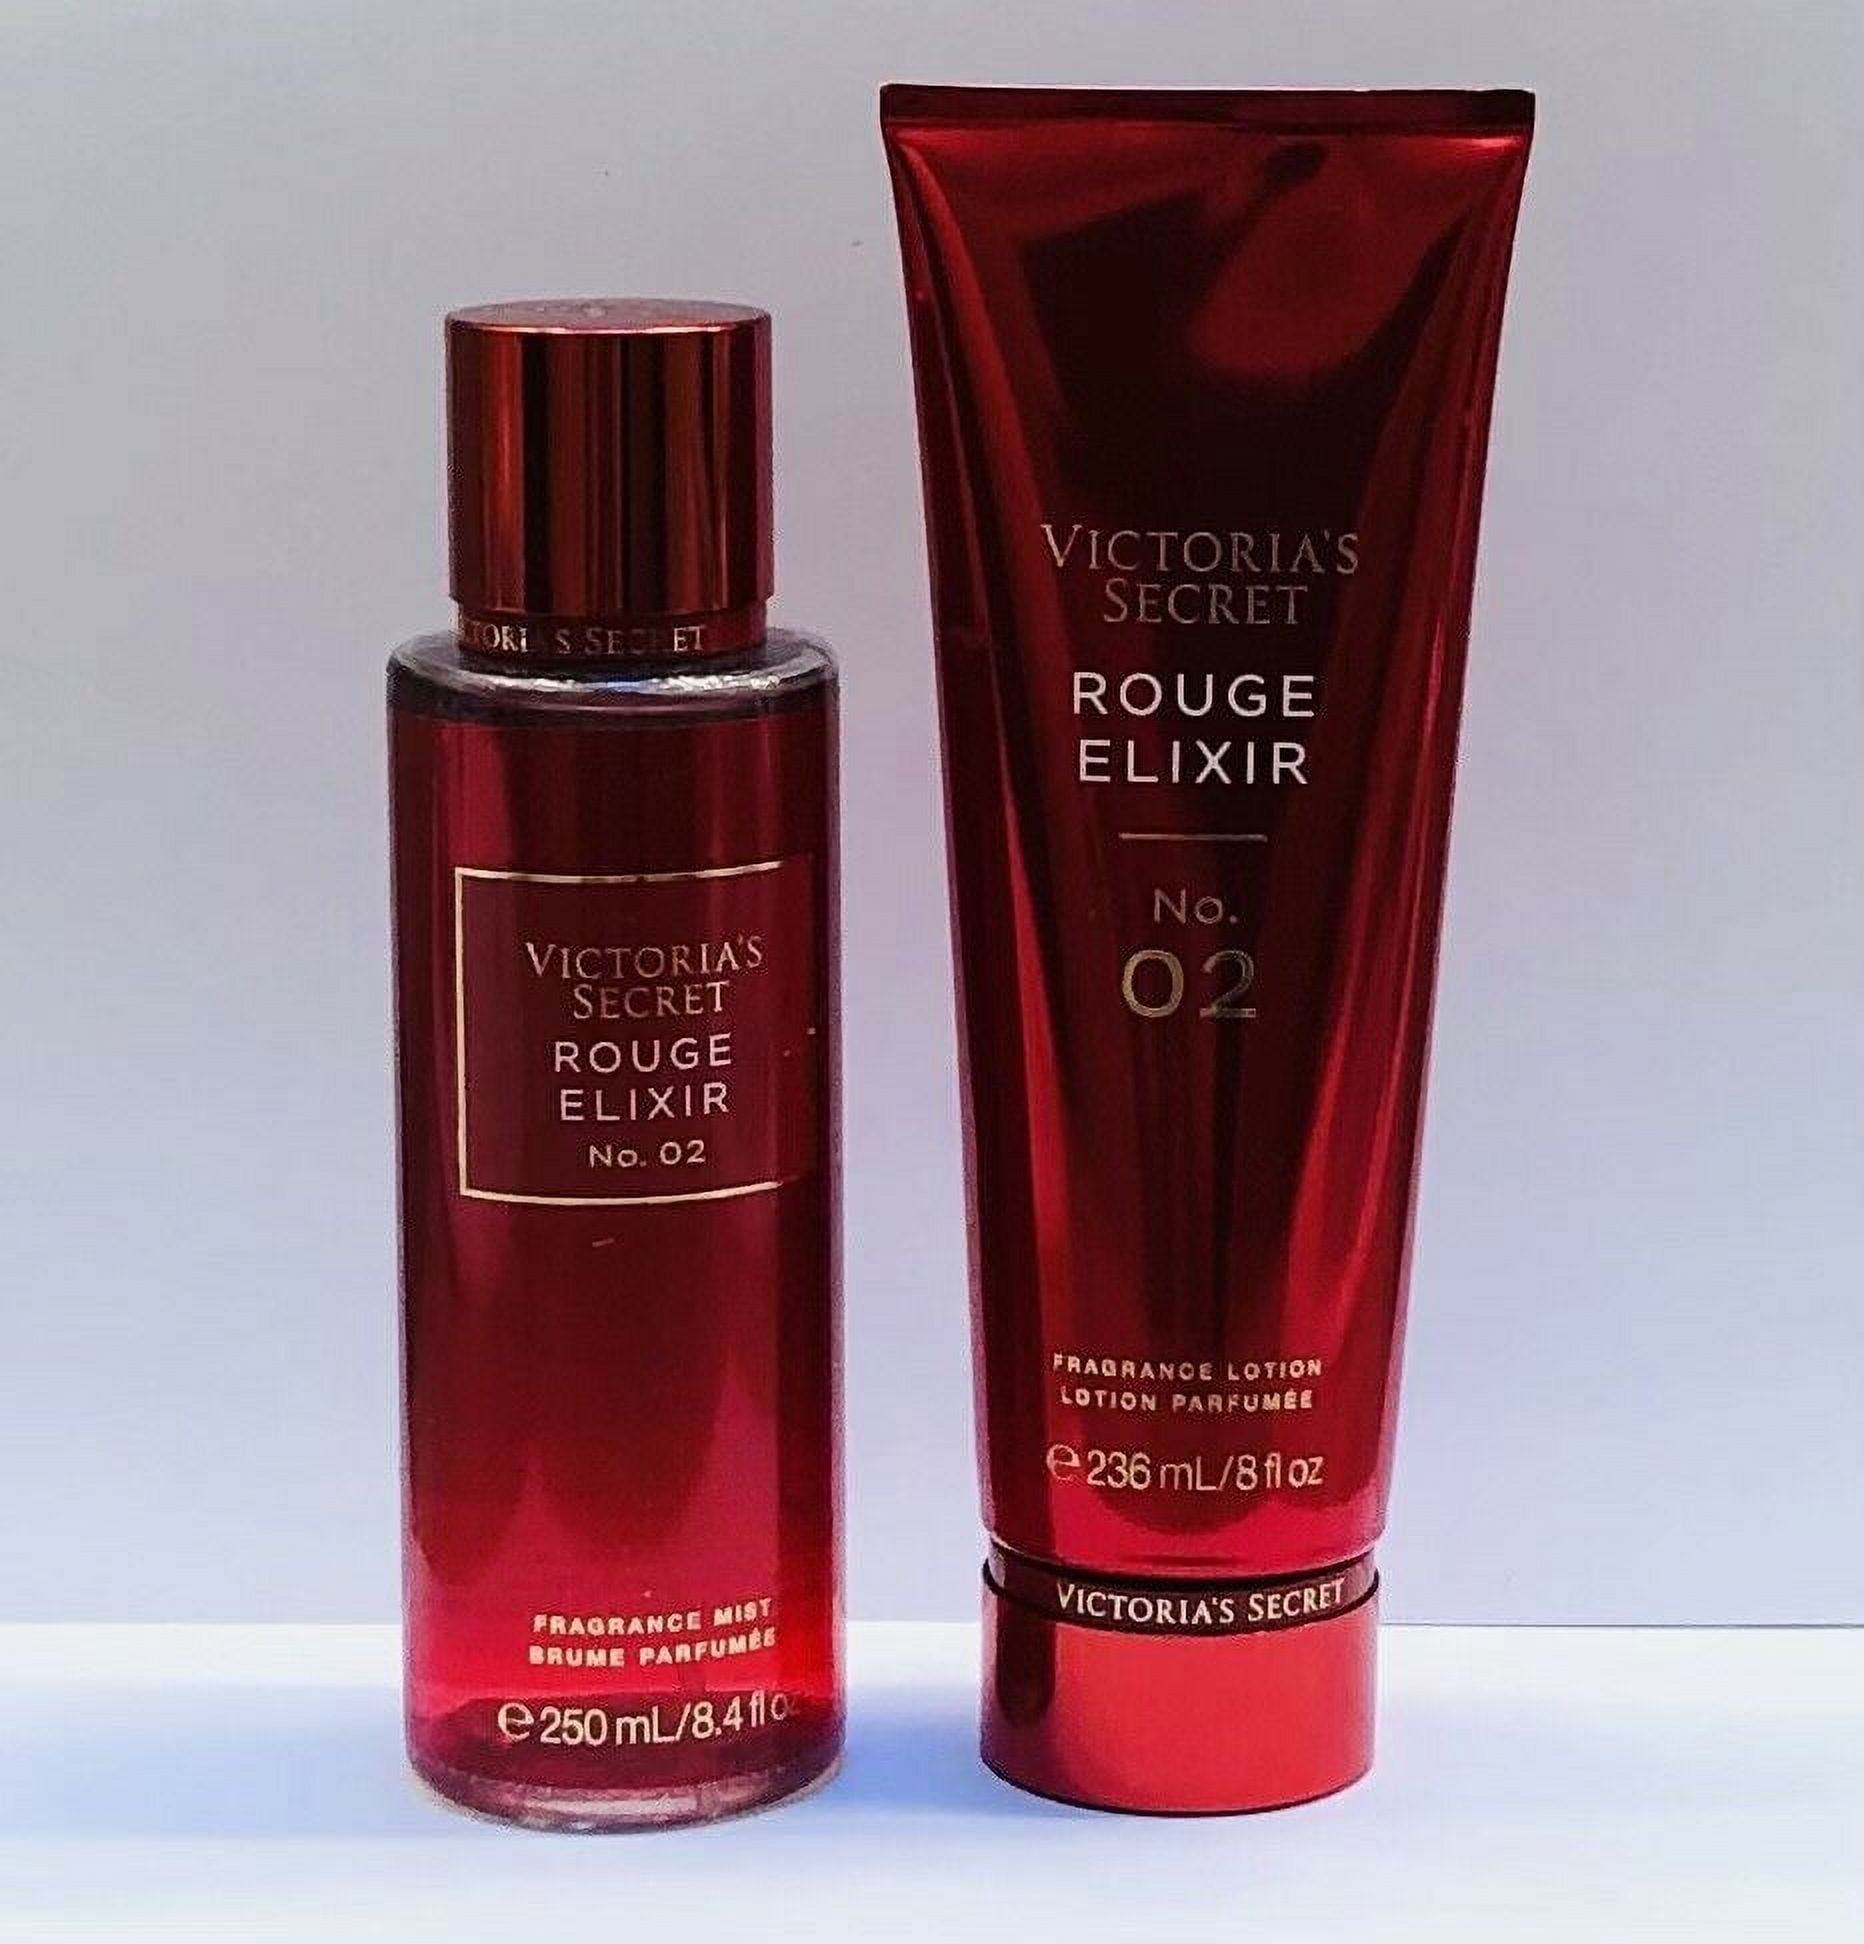 Victoria's Secret Rouge Elixir No. 02 Fragrance Mist and Lotion set of 2